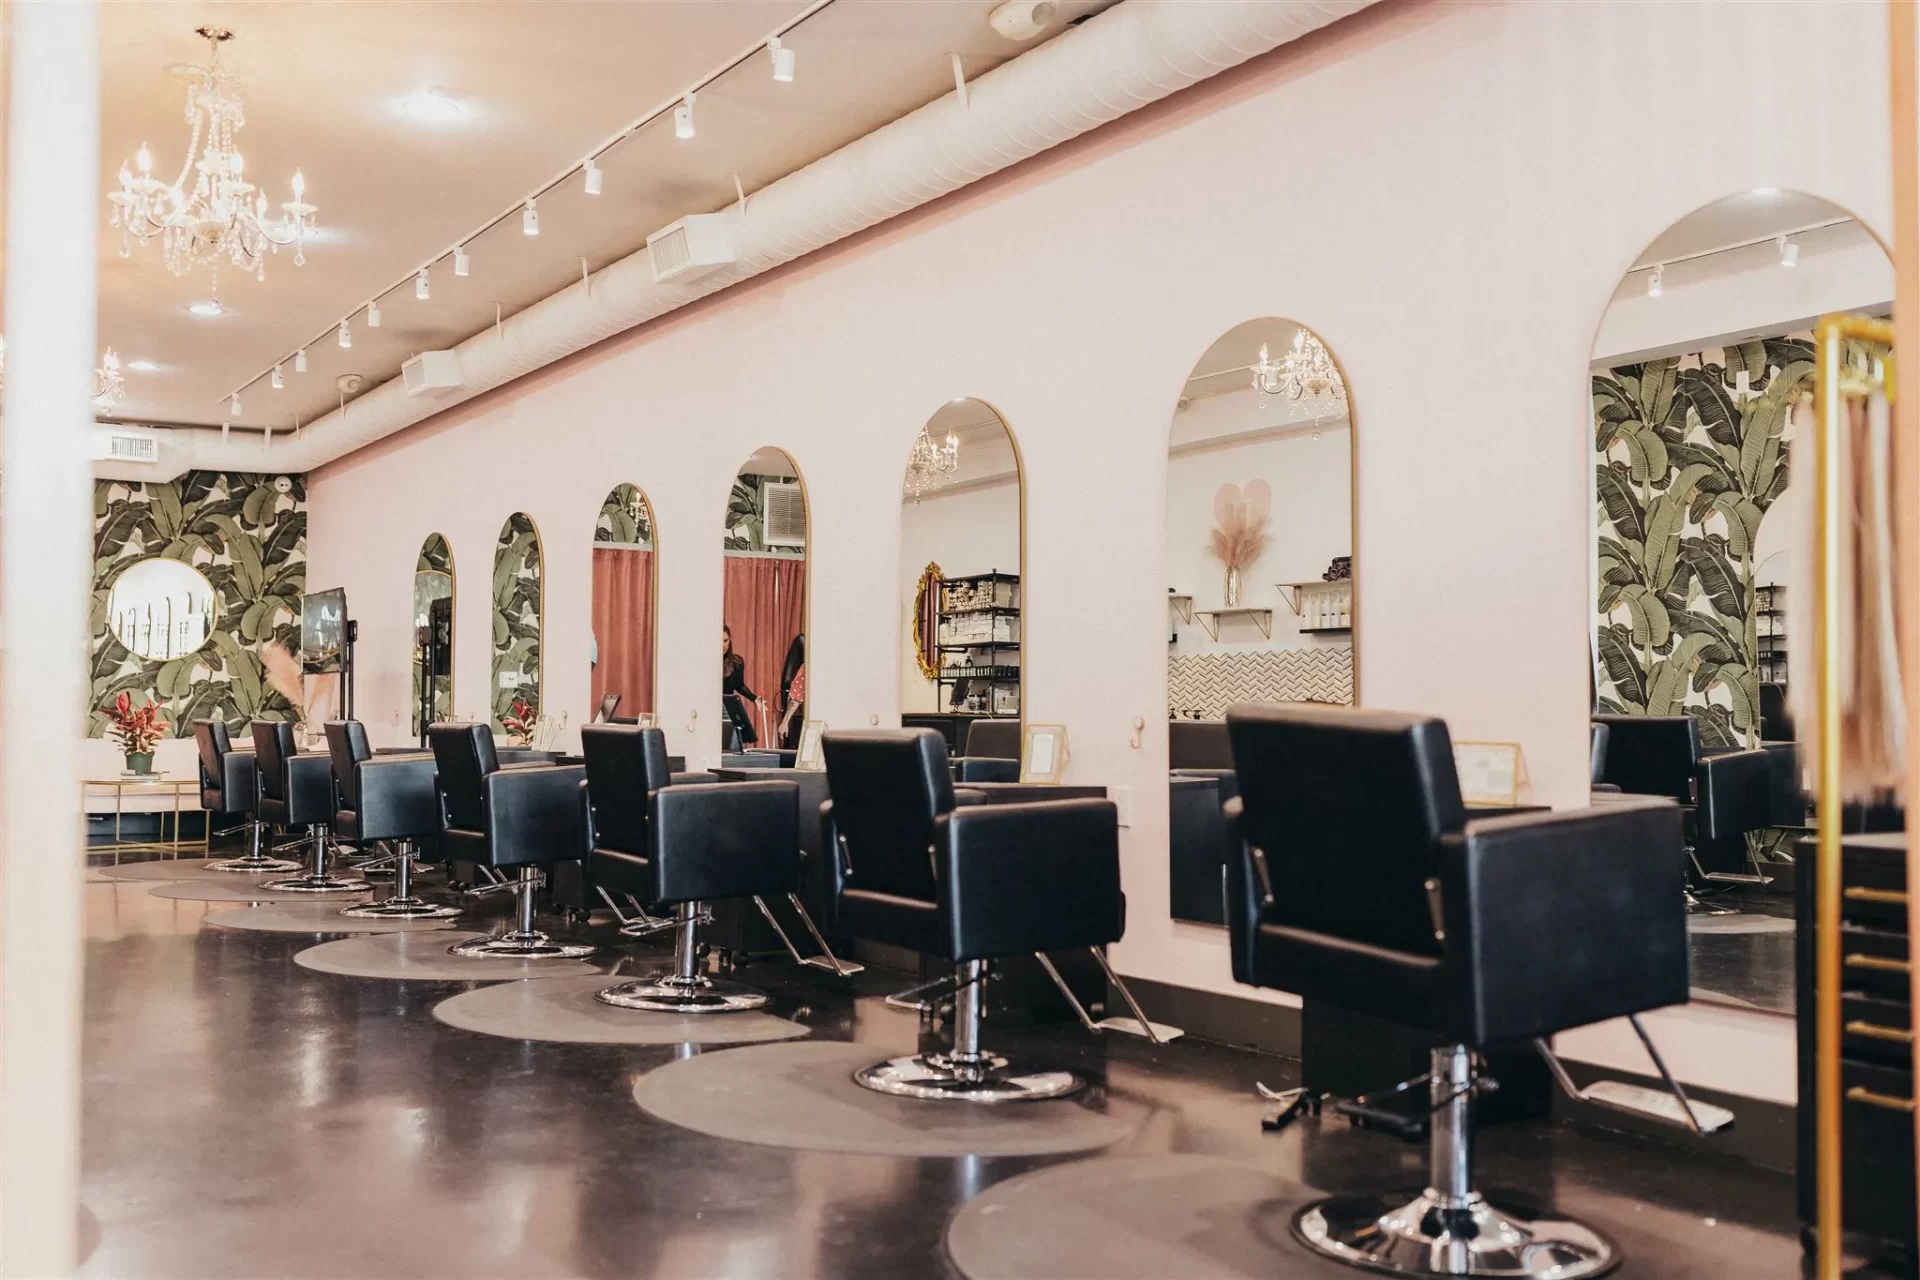 Los Angeles Best Hair extension salon 2022 2023